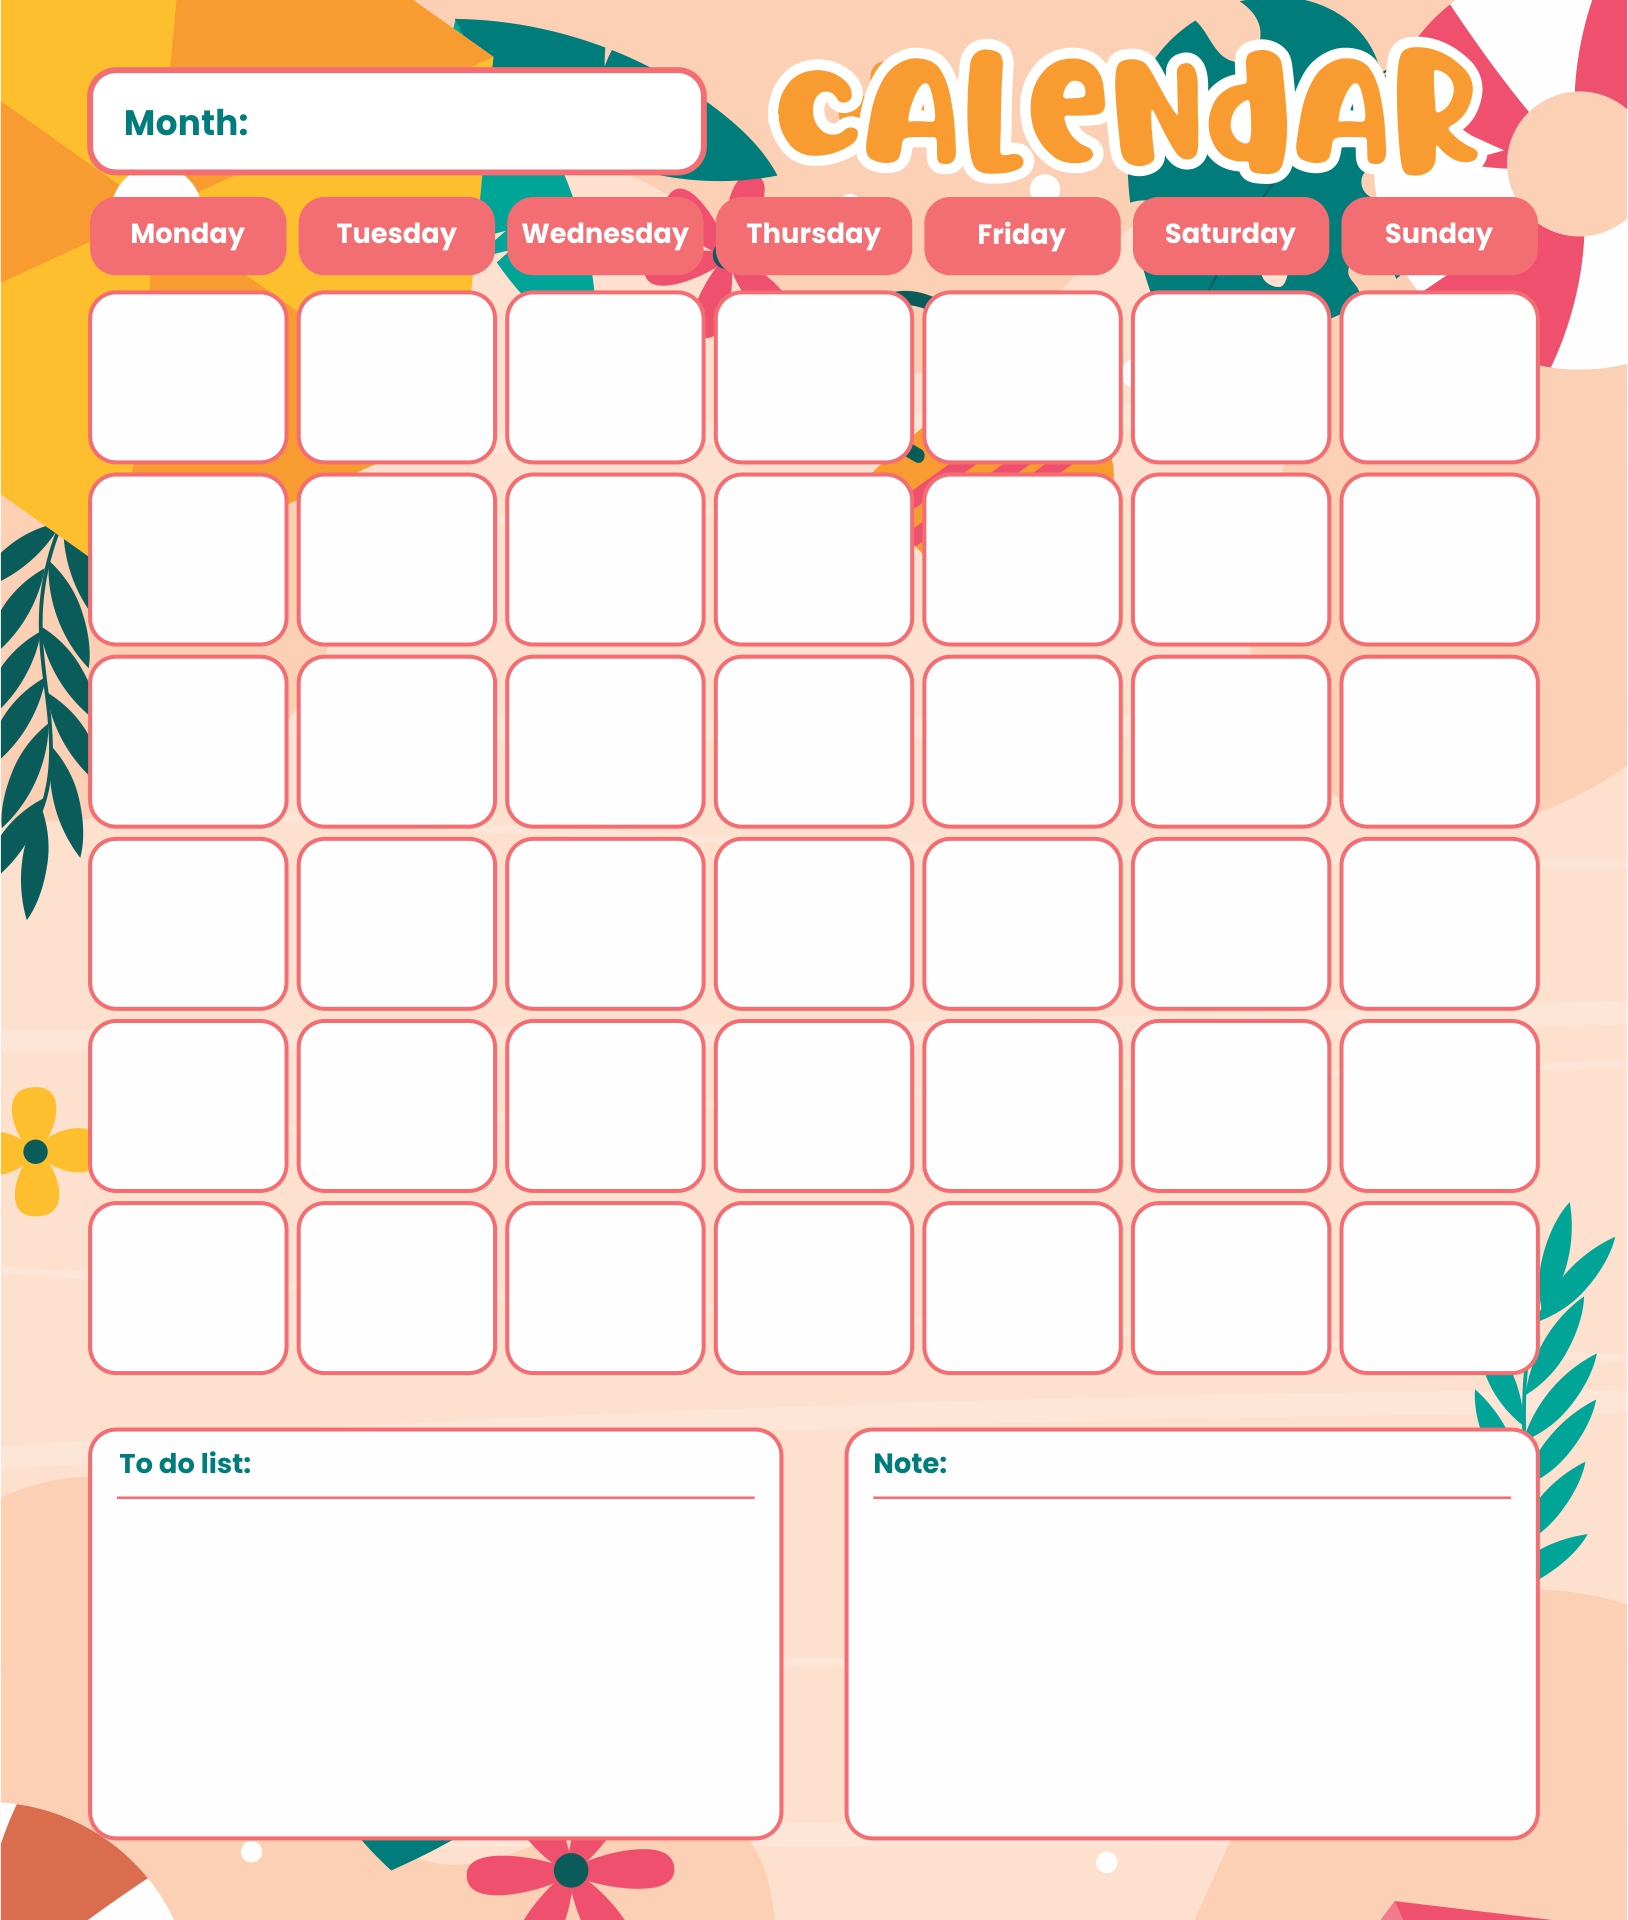 6 Best Images of Printable Blank Calendar Template - Blank Calendar